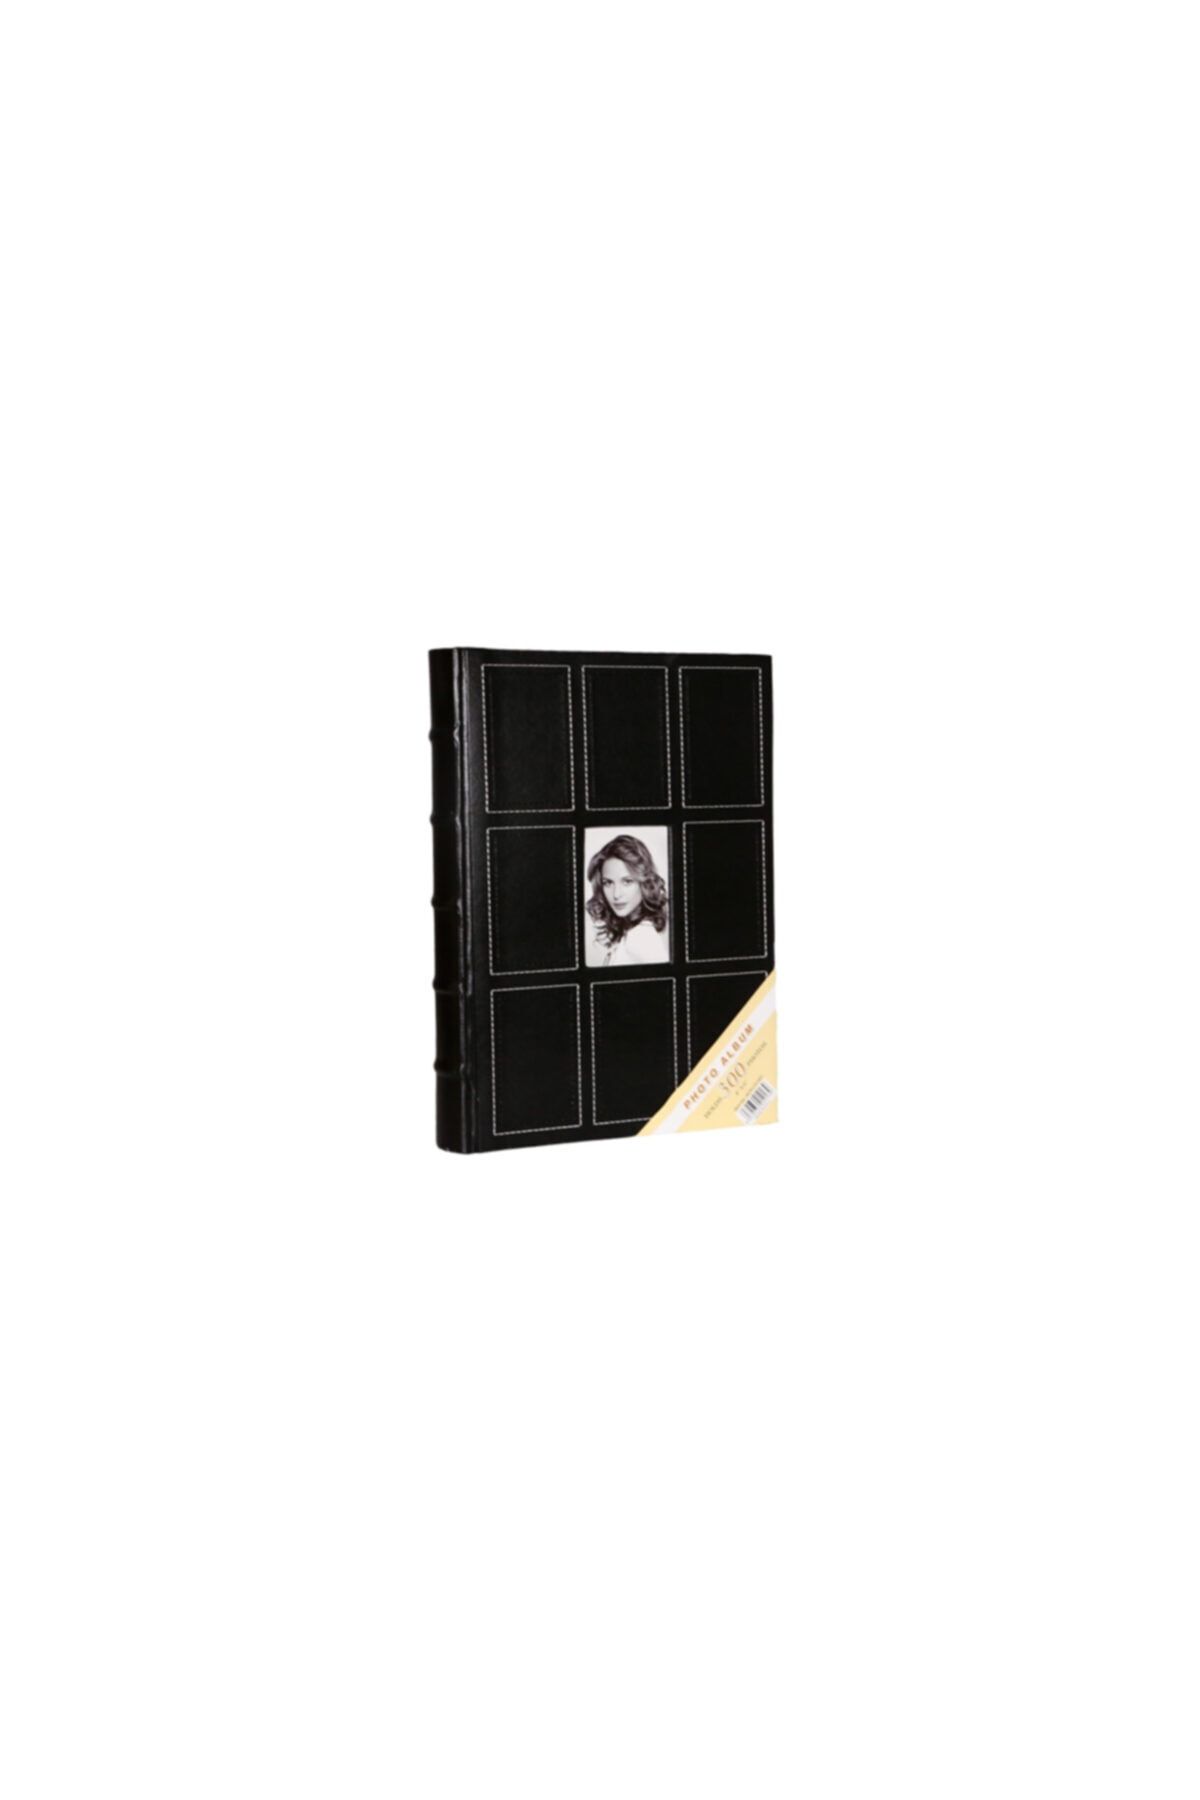 F&D albüm Fotoğraf Albümü 10x15cm 300lük Siyah Deri Retro